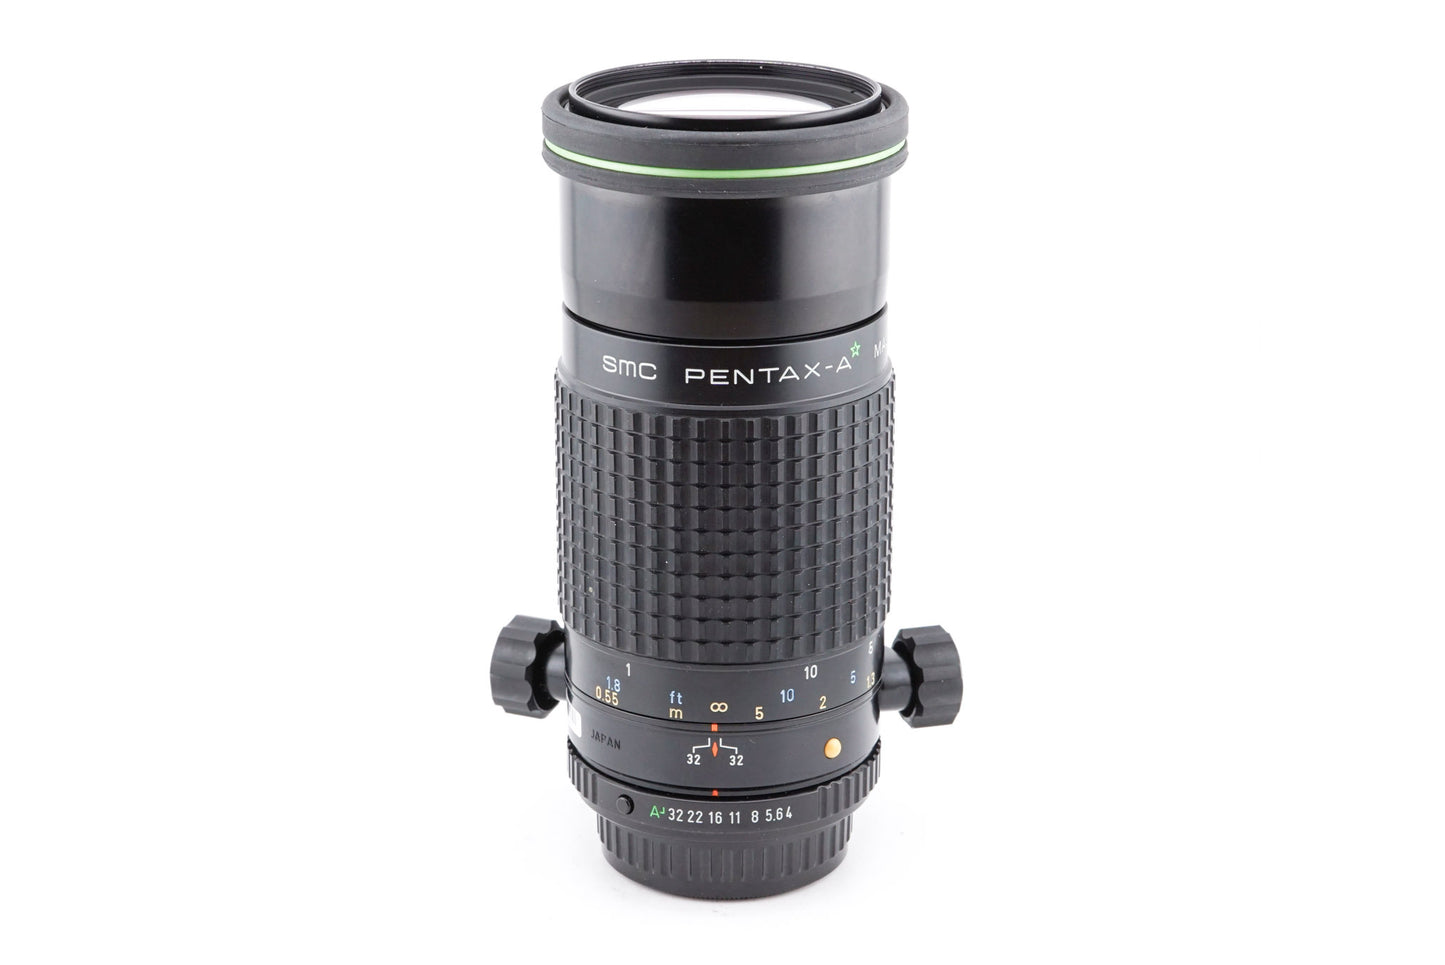 Pentax 200mm f4 SMC ED Pentax-A* Macro